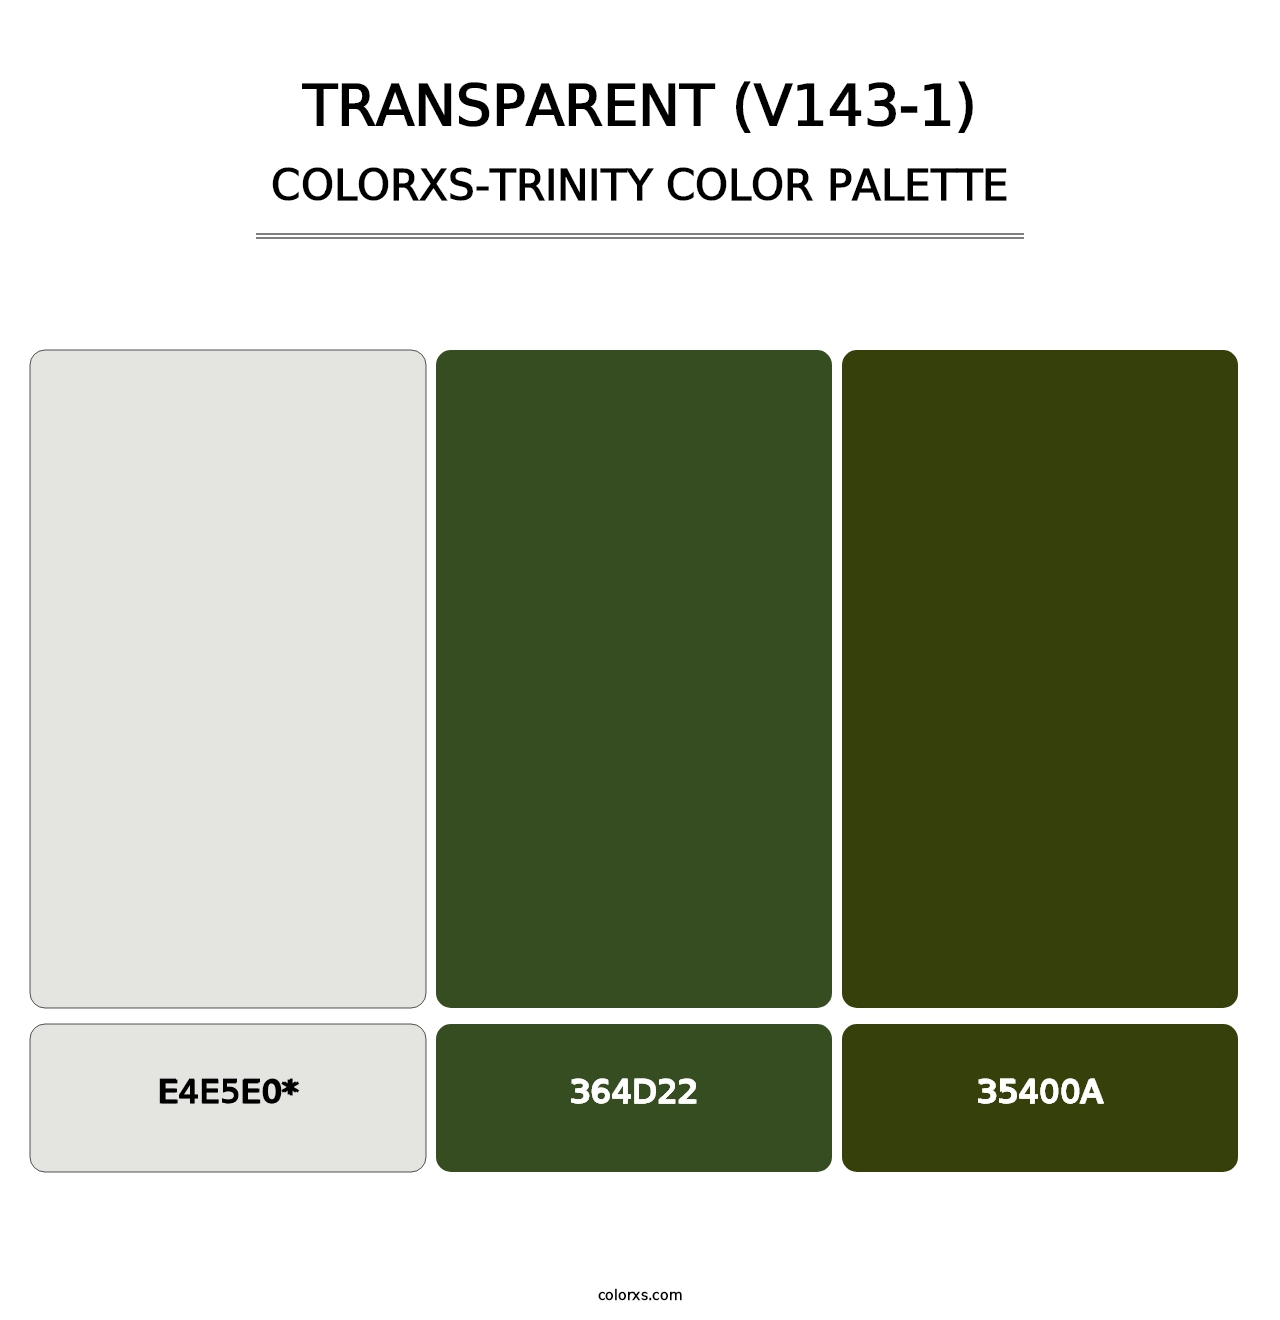 Transparent (V143-1) - Colorxs Trinity Palette